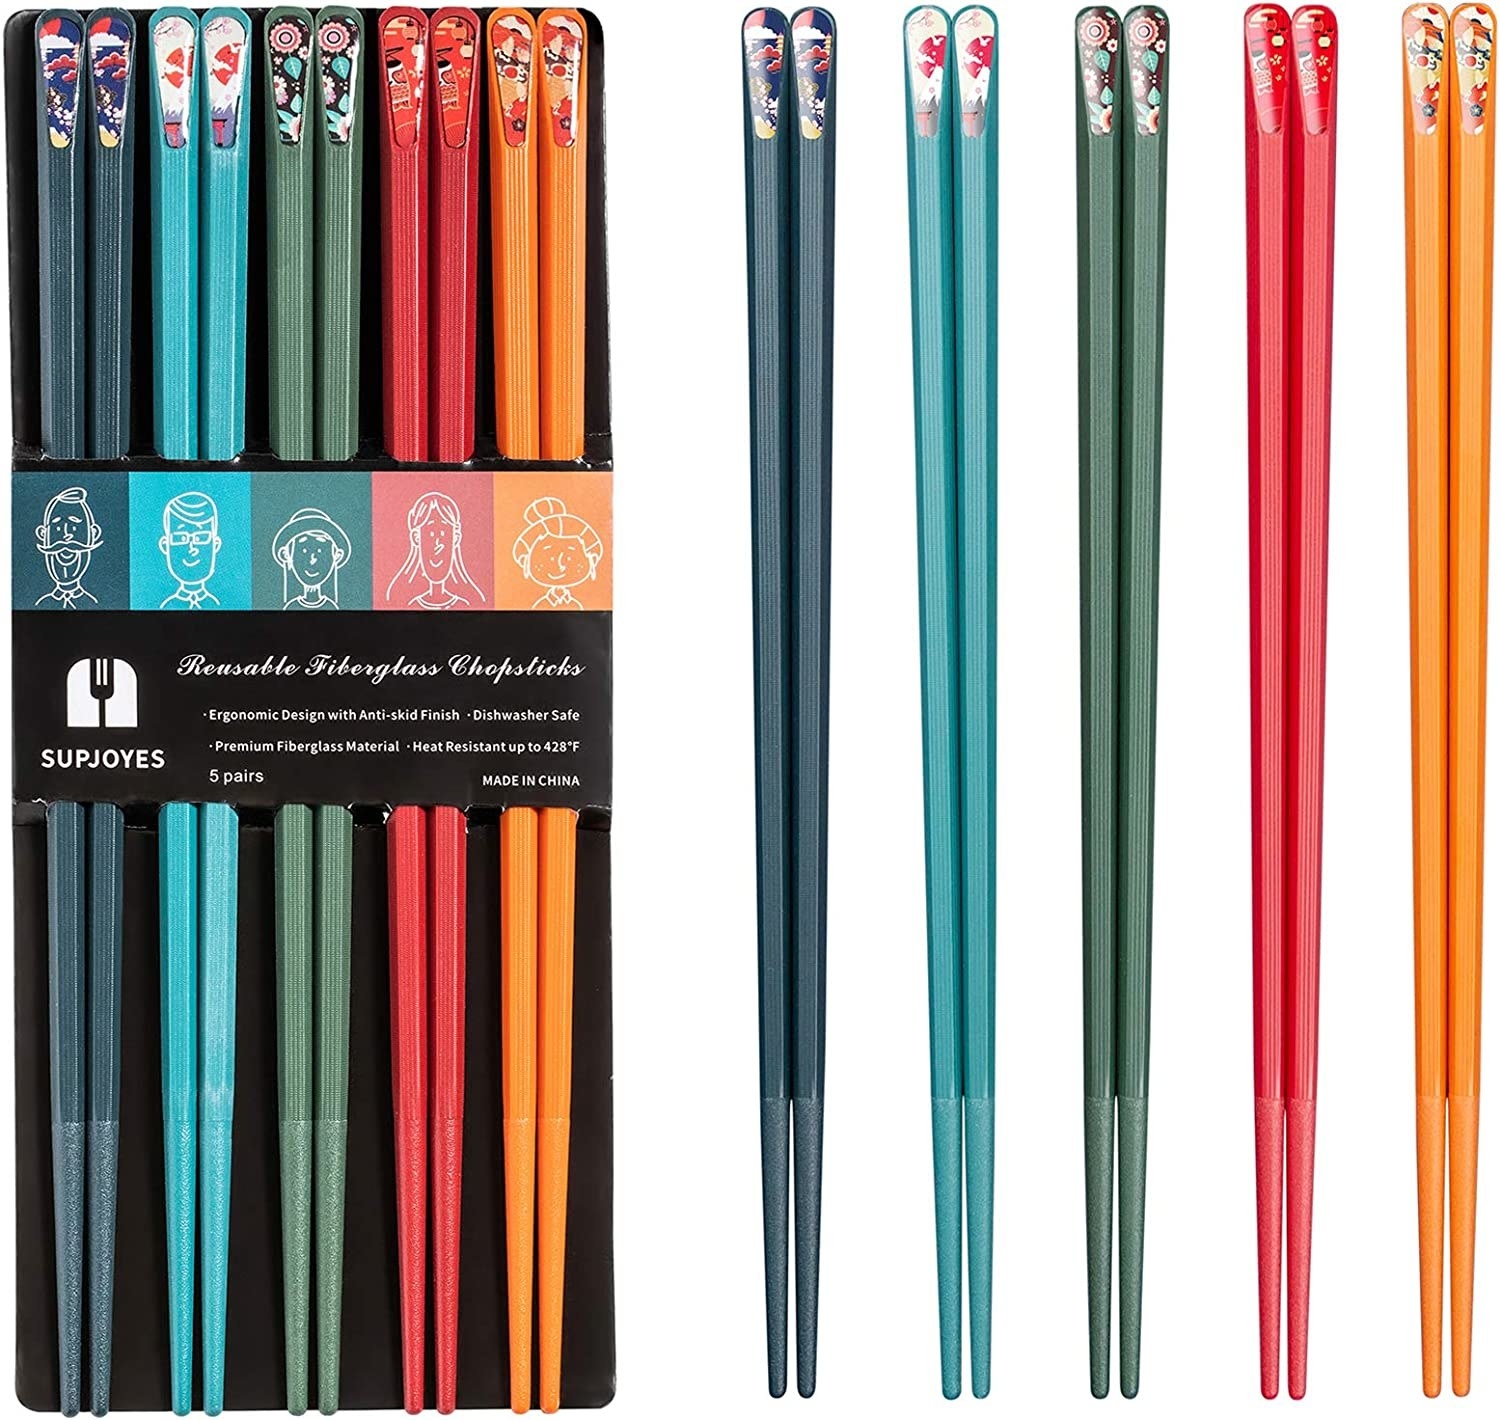 A set of multicoloured chopsticks